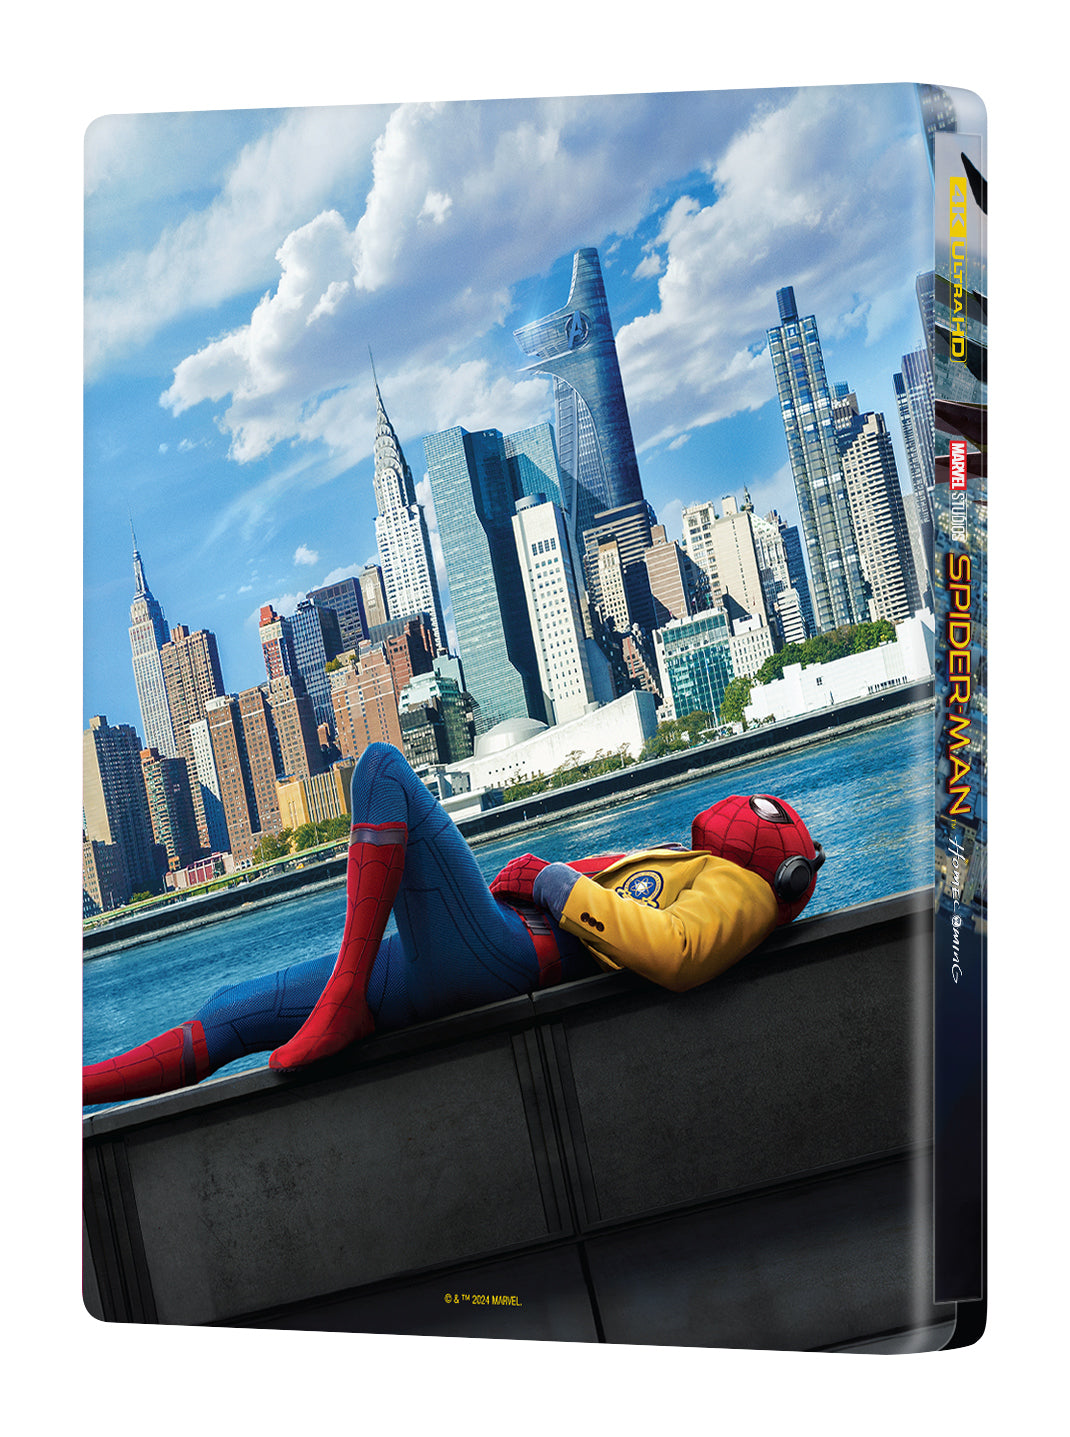 Spider-Man: Homecoming 4K Double Lenticular B SteelBook (ME#64)(Hong Kong)